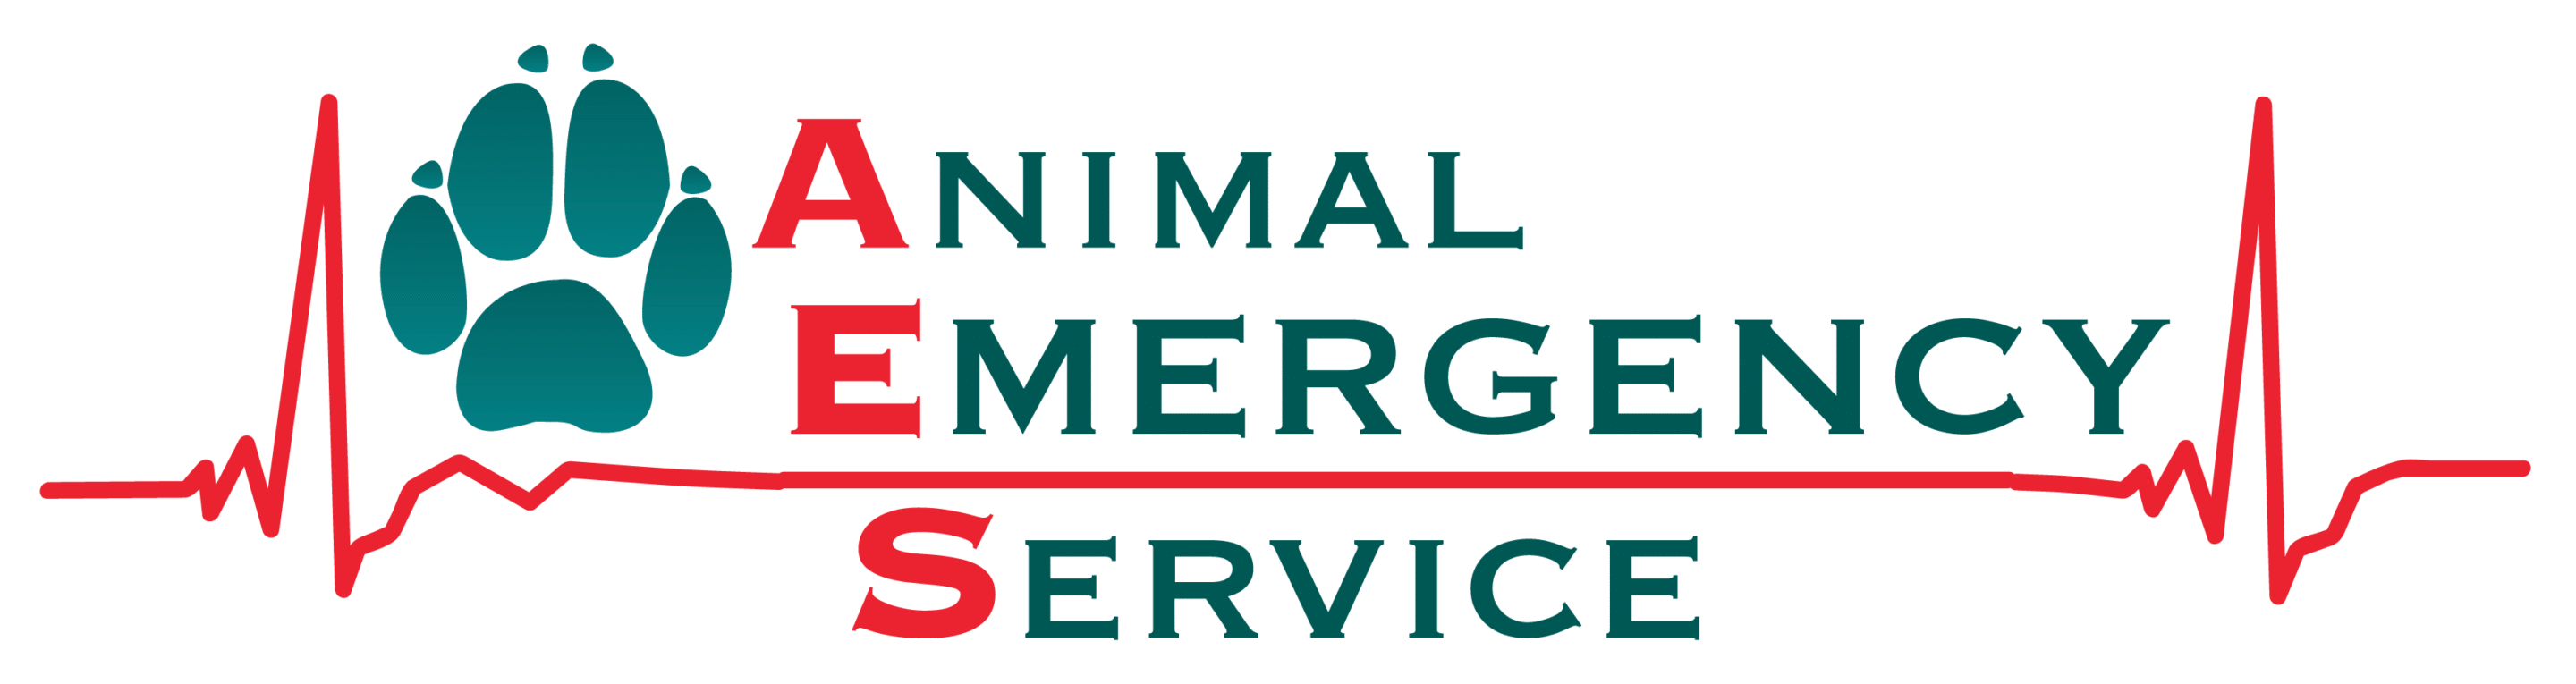 Animal Emergency Center Gold Coast, Brisbane, Sunshine Coast - Animal Emergency Service